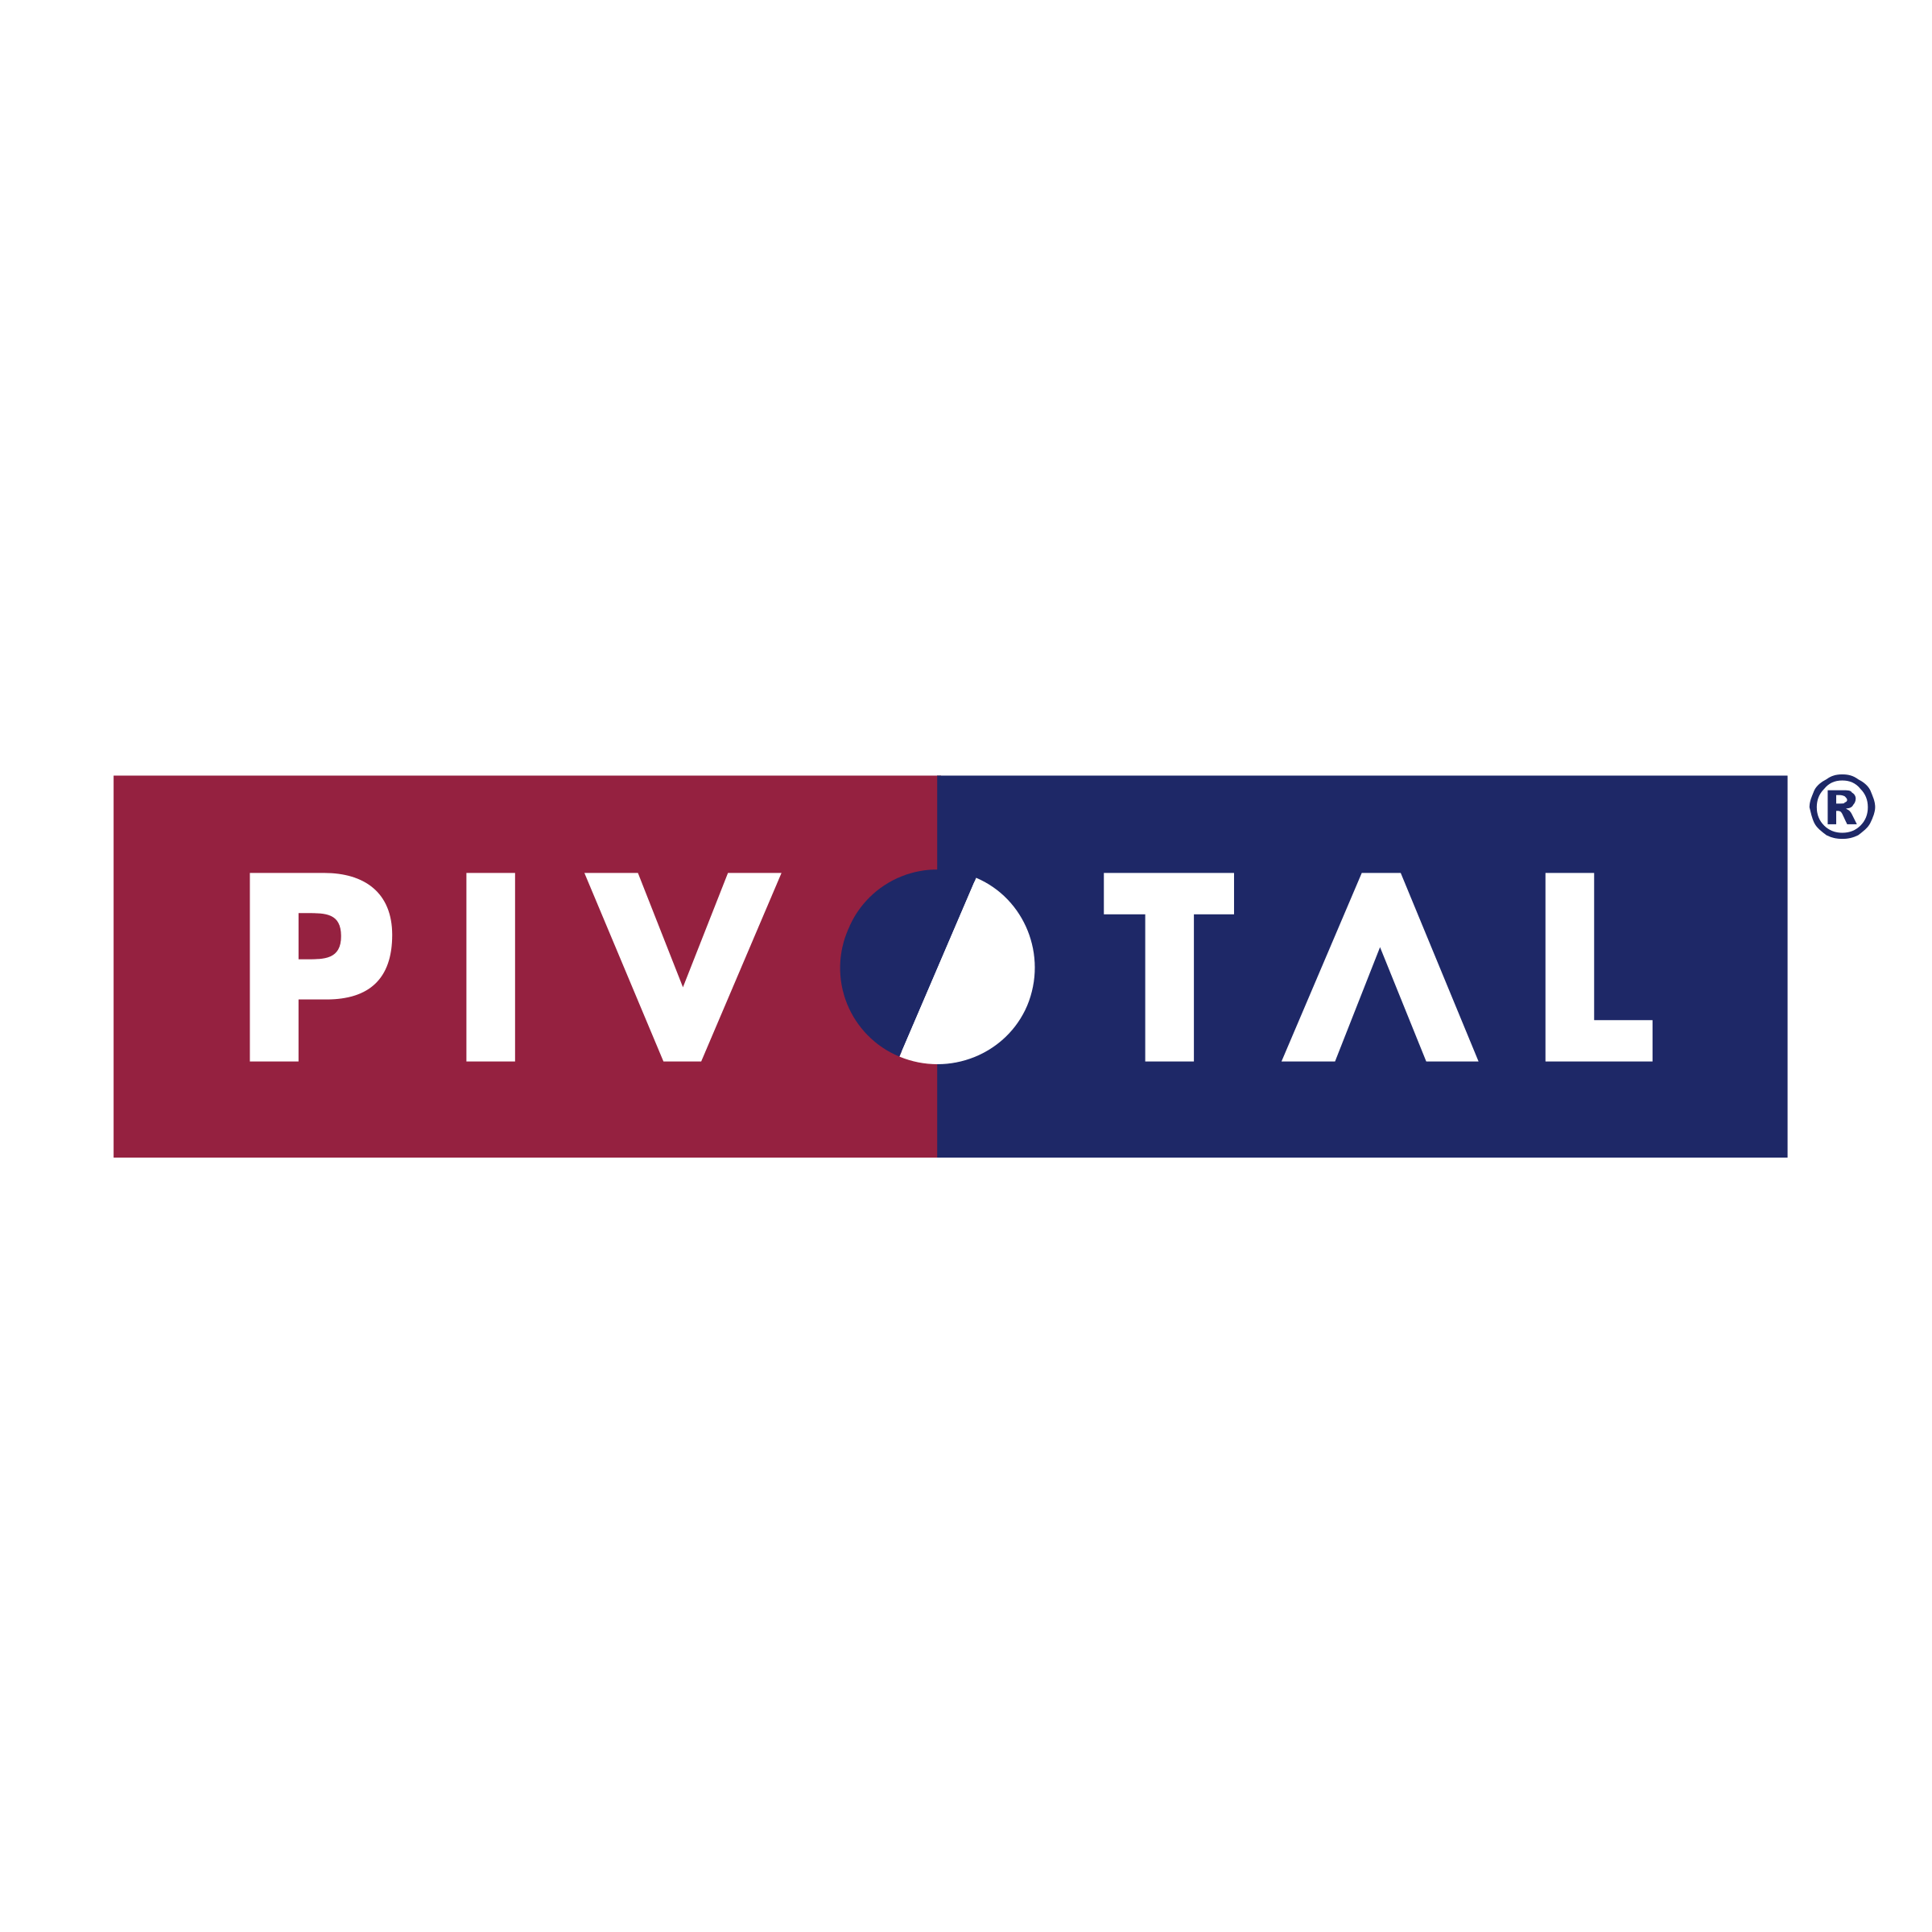 Pivotal Logo - Pivotal Logo PNG Transparent & SVG Vector - Freebie Supply